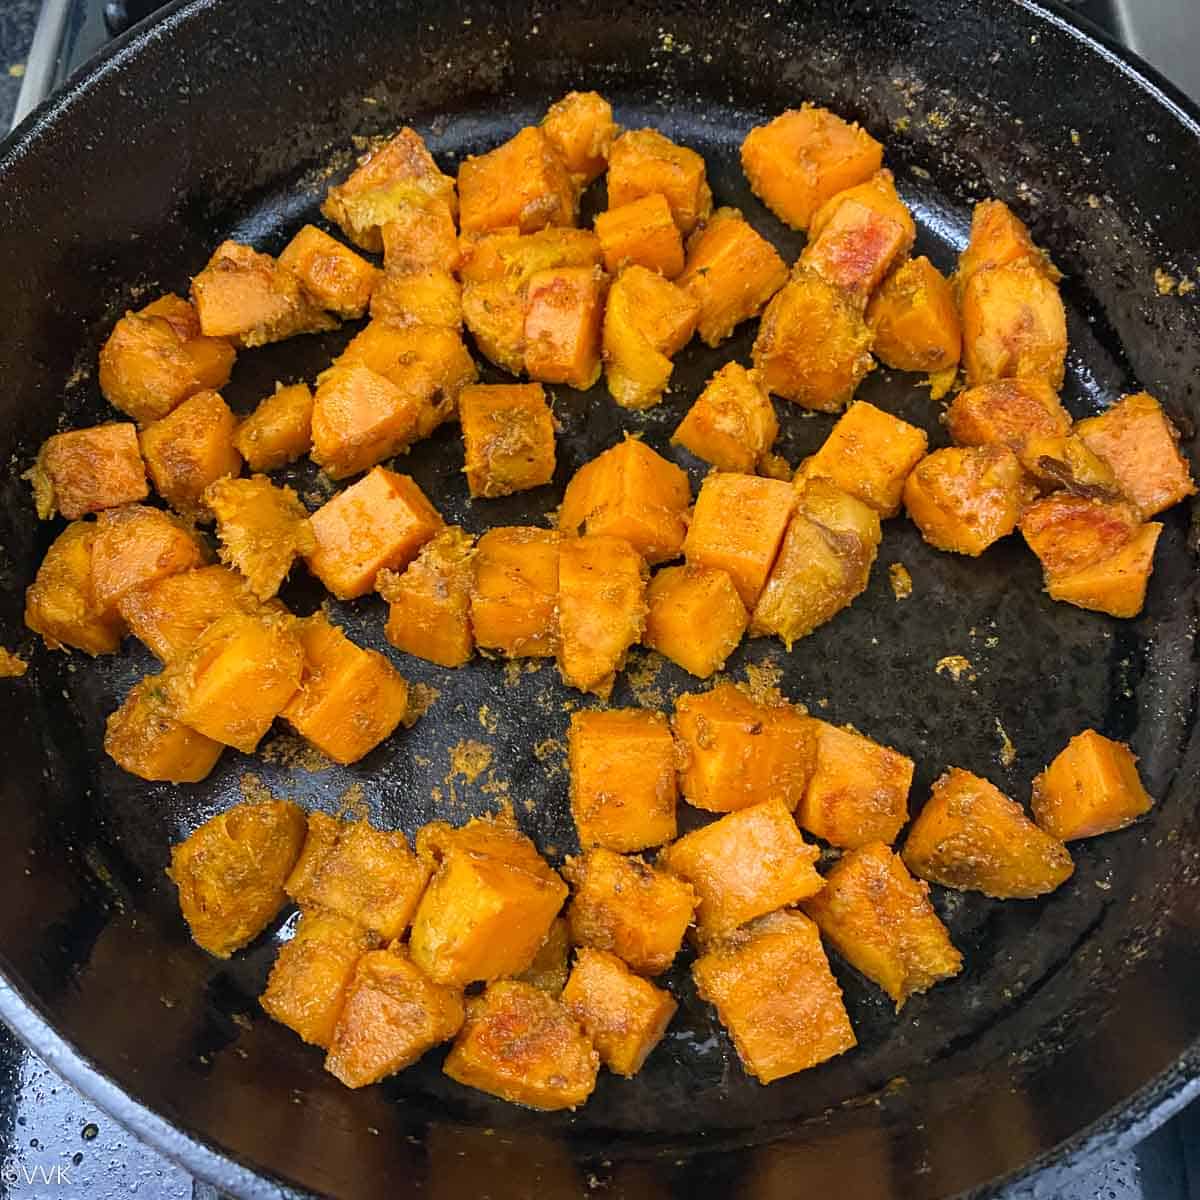 roasting the sweet potatoes